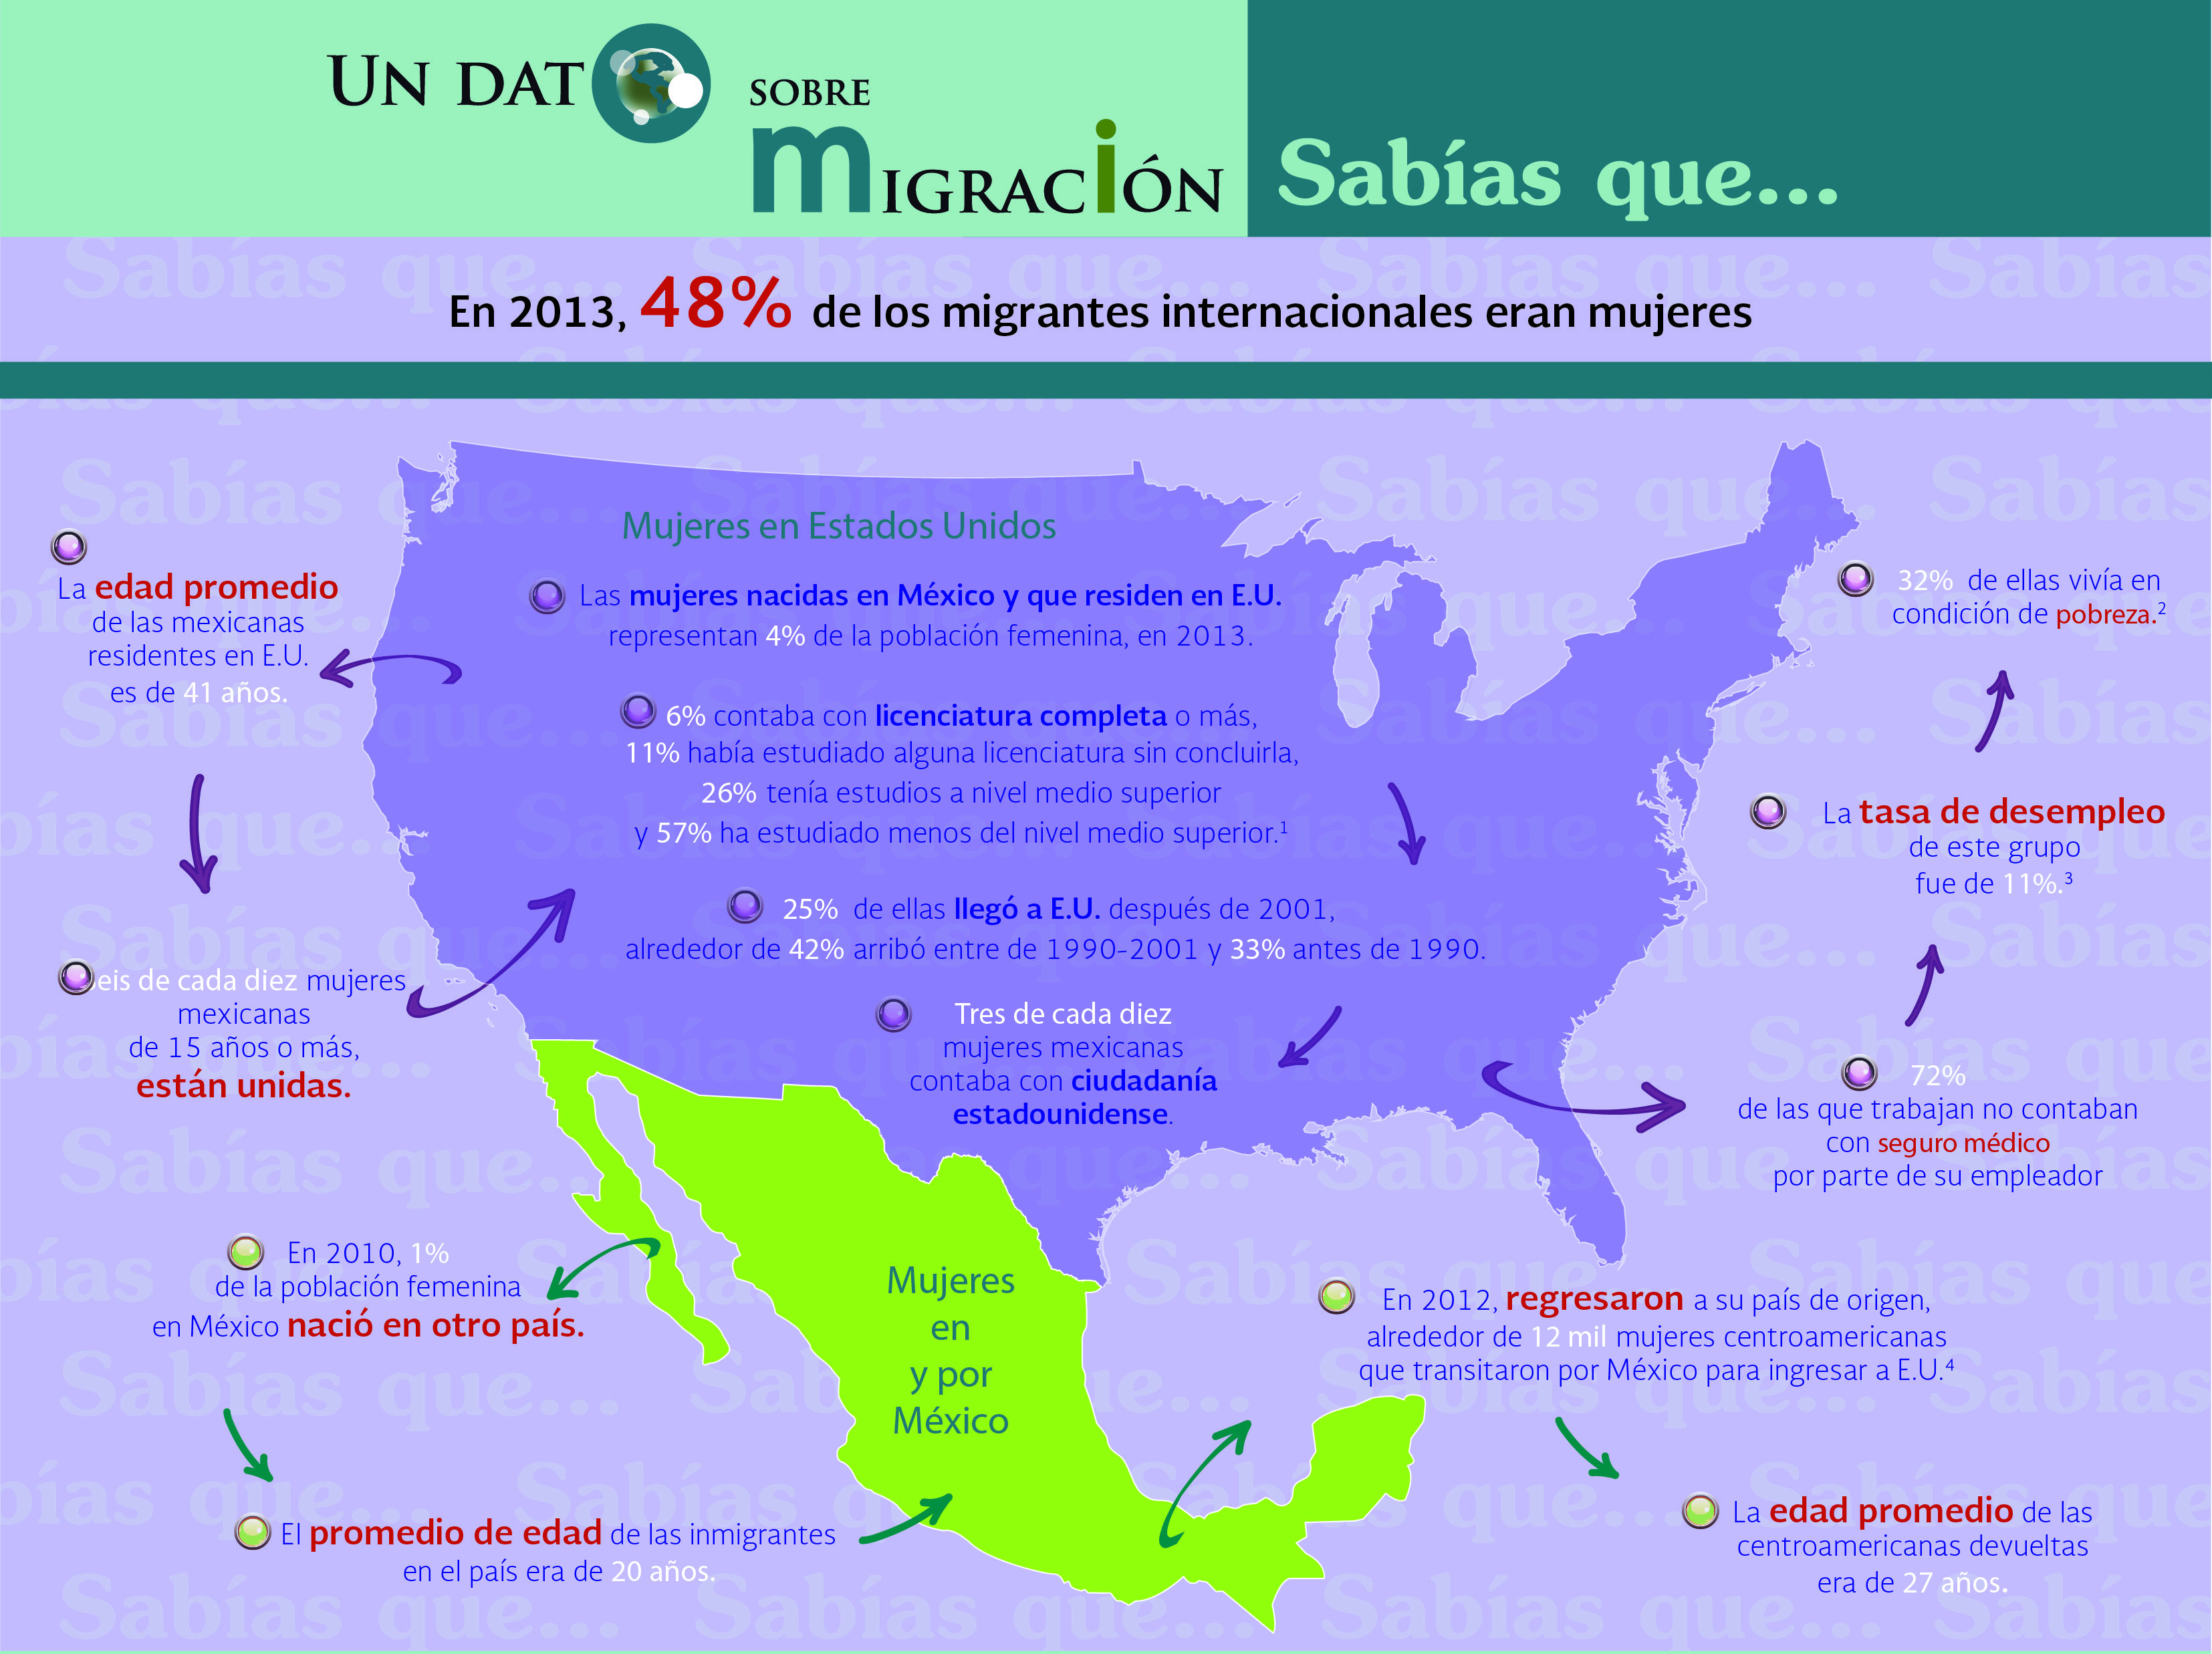 /cms/uploads/image/file/259992/Infografia_Mujeres.jpg